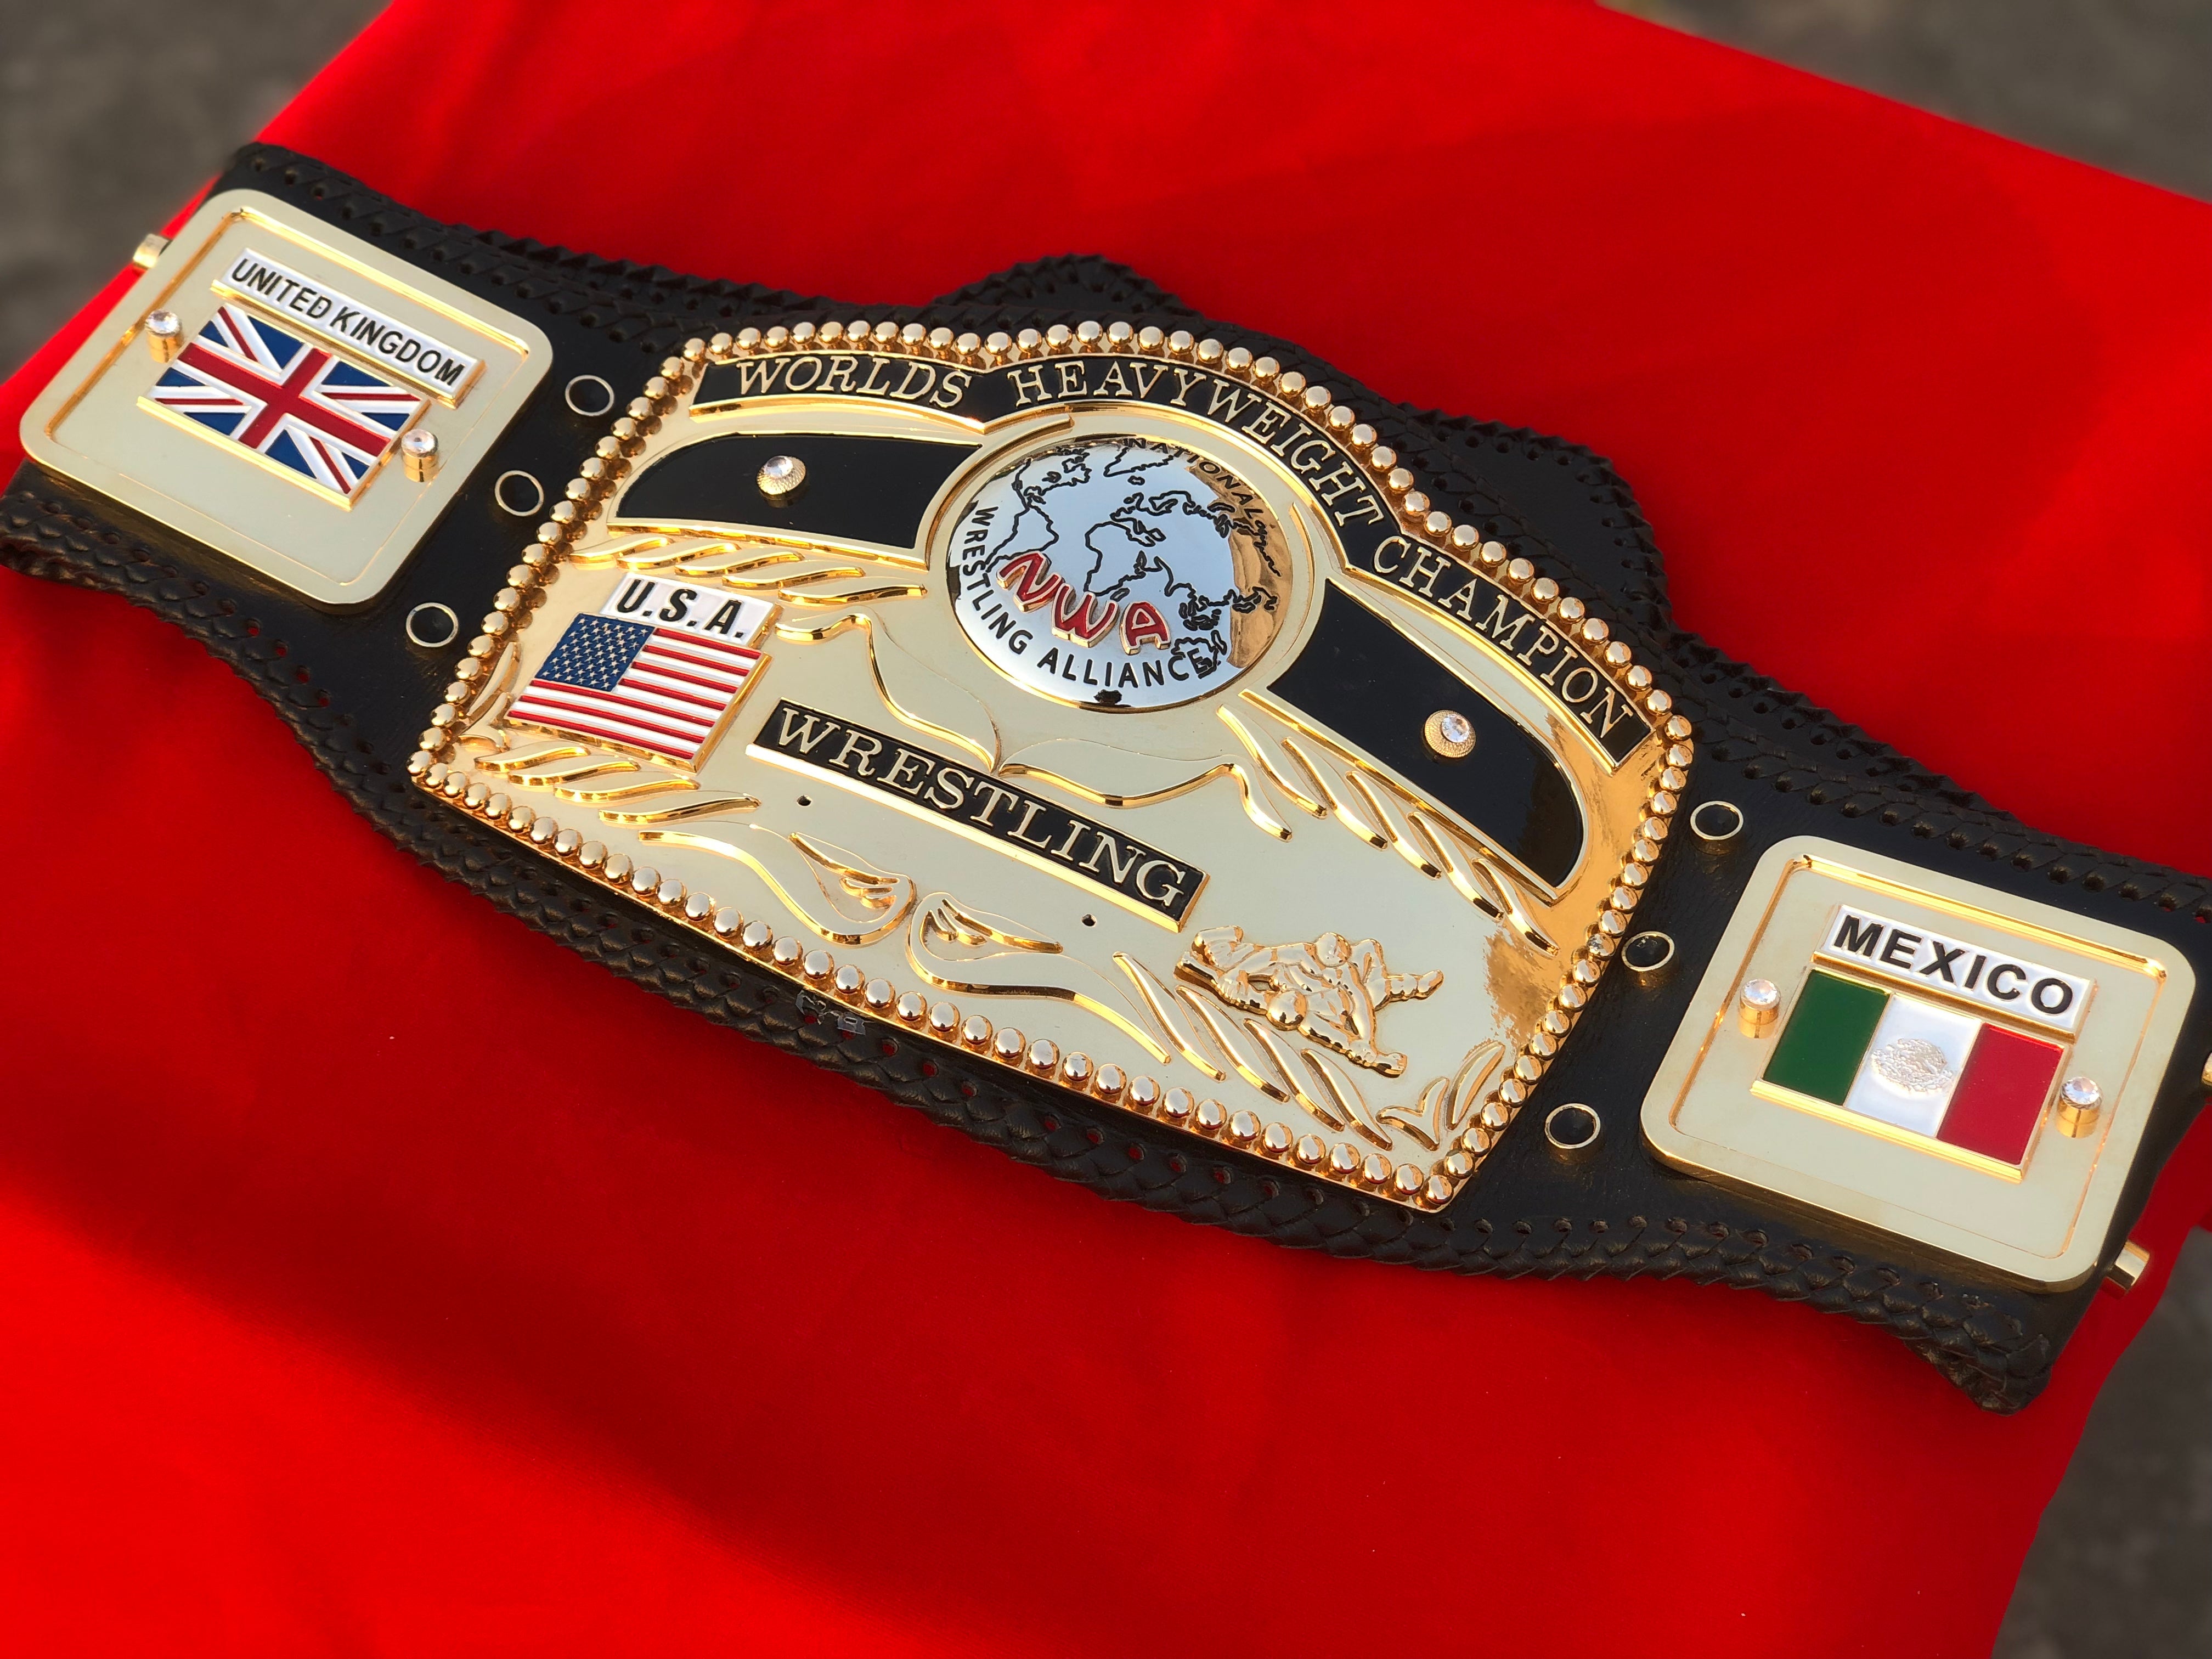 NWA Premium Domed Globe CNC Championship Belt